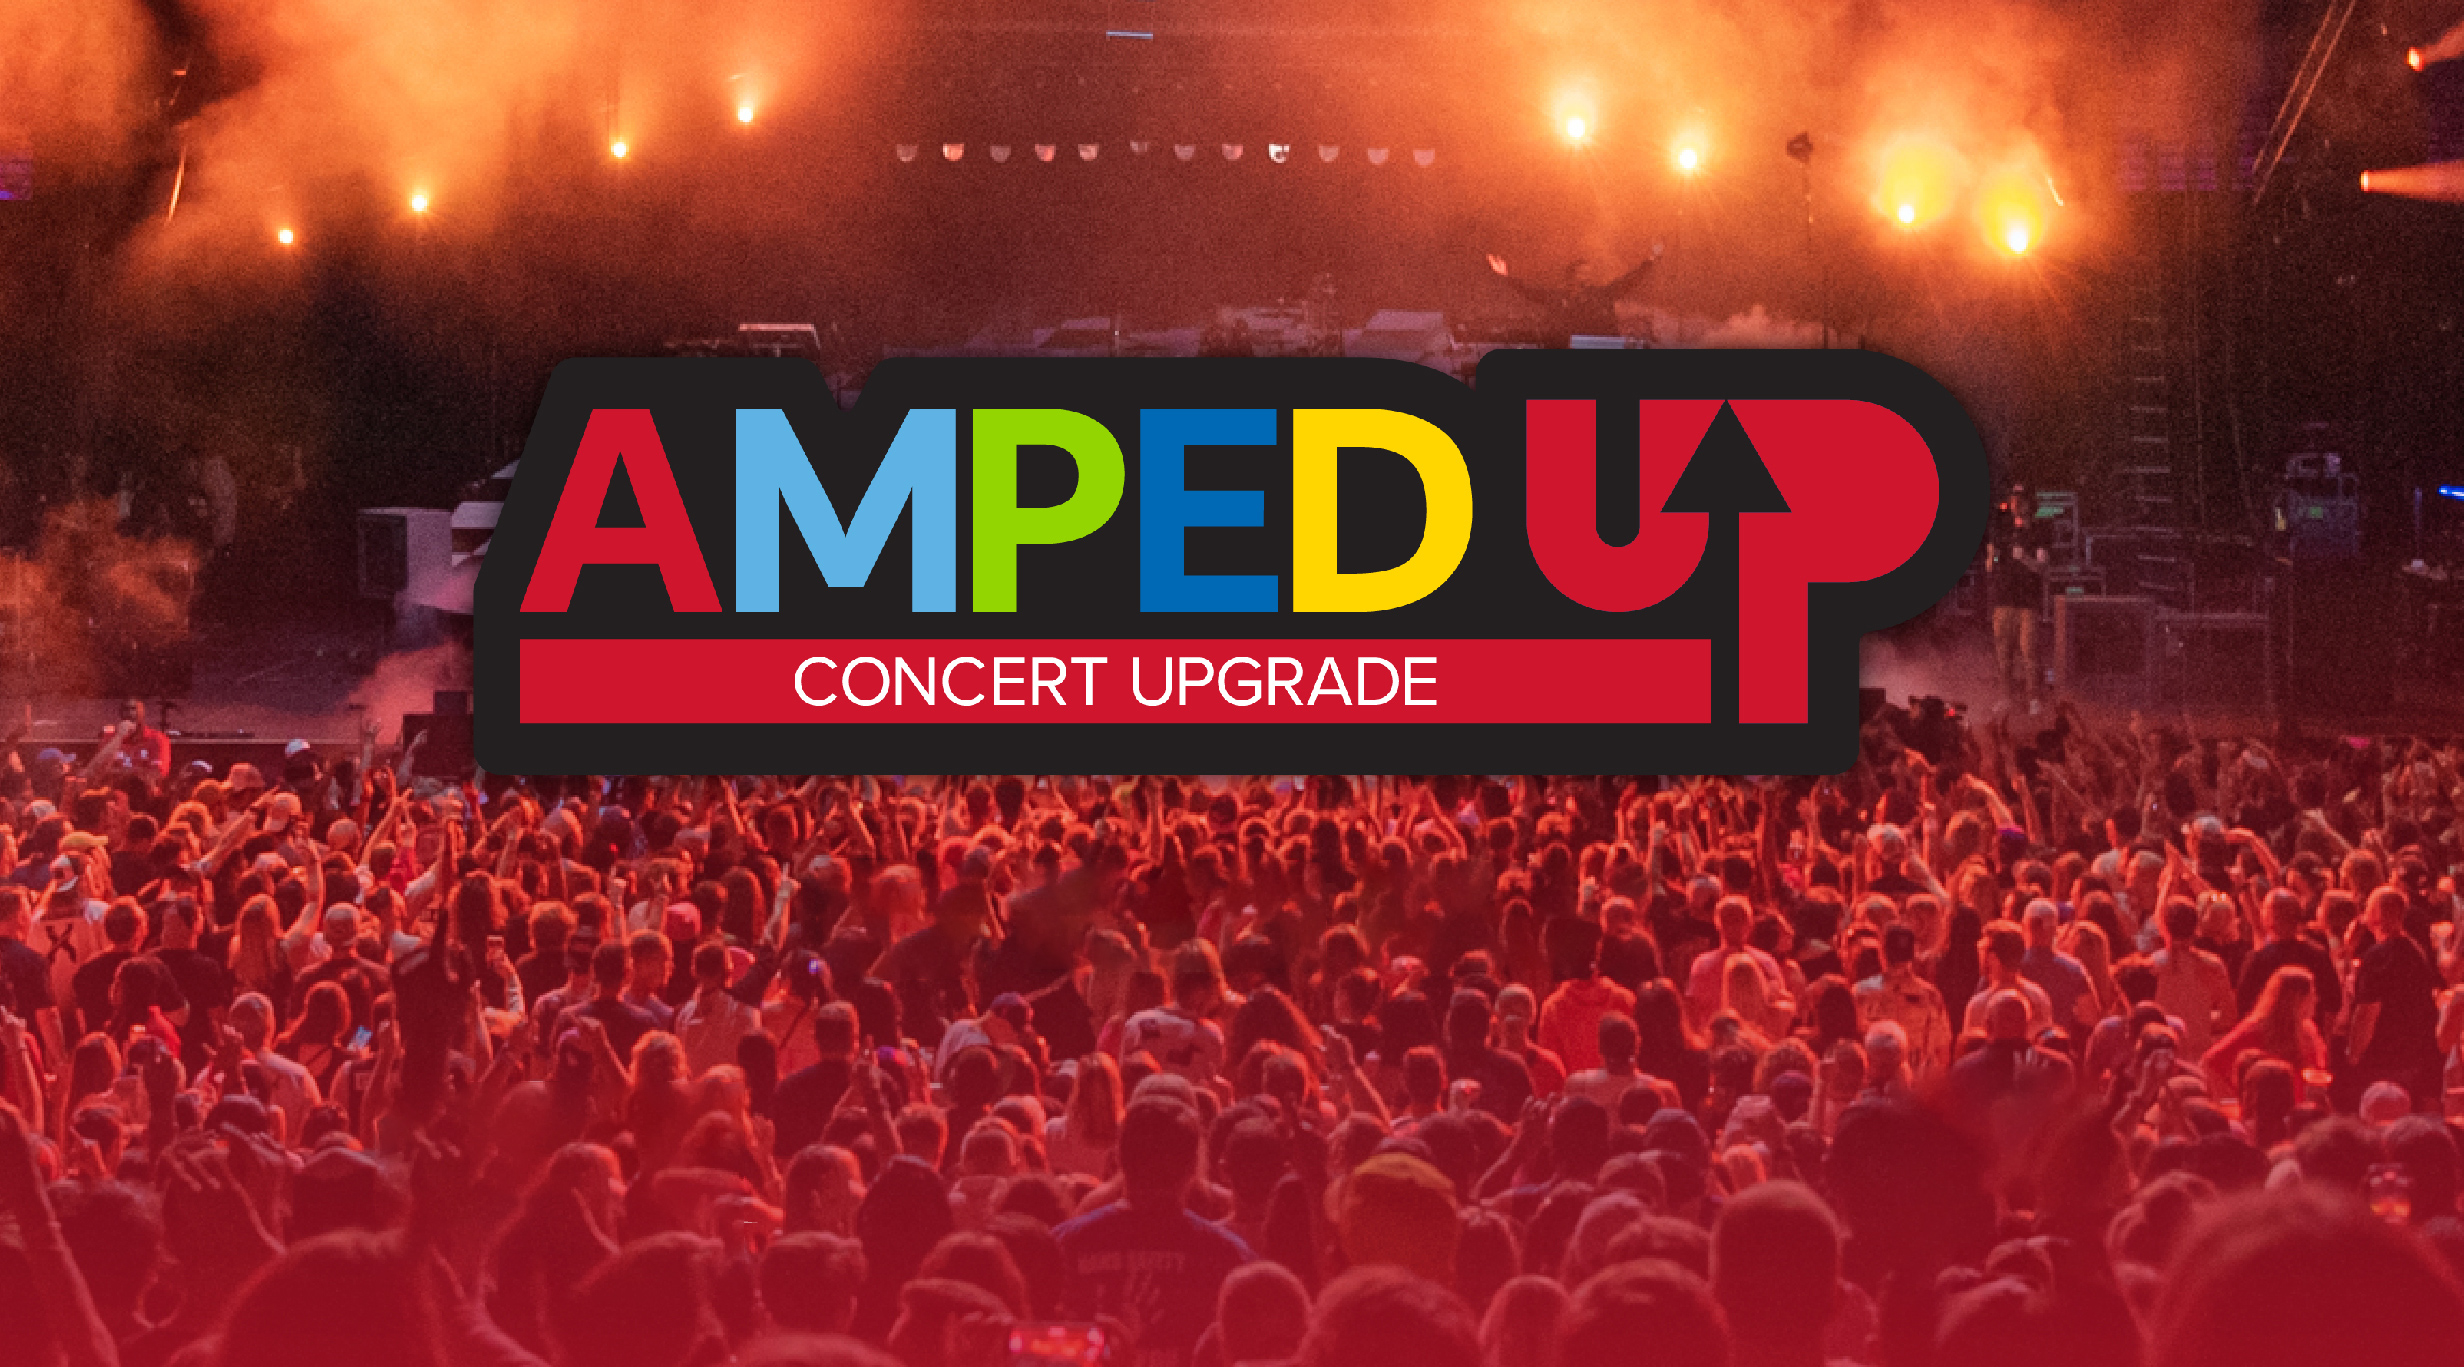 Summerfest Amped Up Concert Upgrade